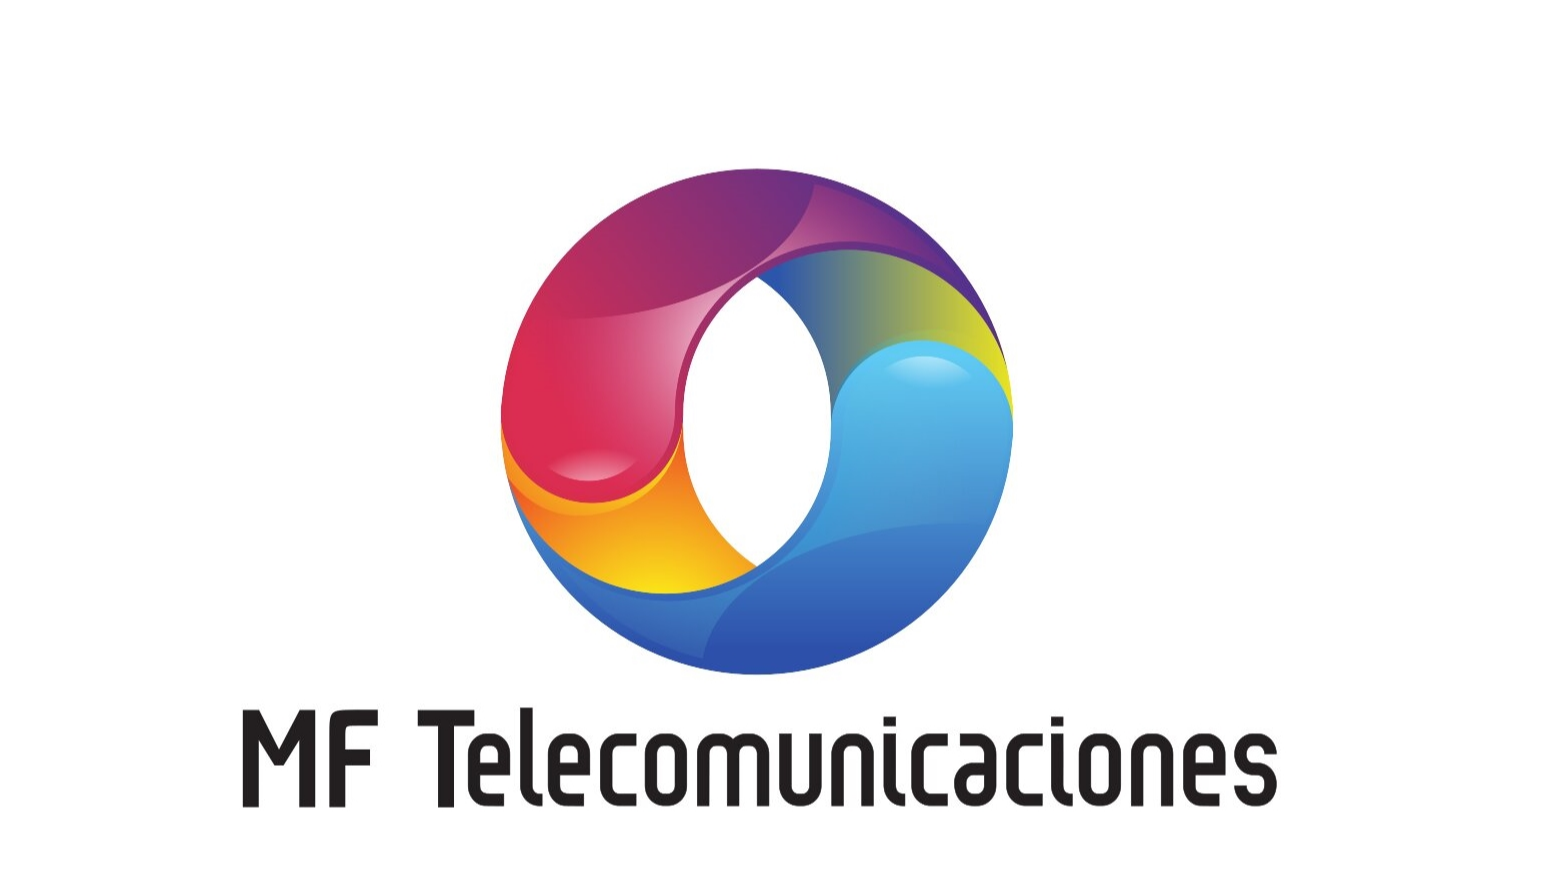 MF Telecomunicaciones - Telecommunications Service Provider - Madrid - 913 70 32 33 Spain | ShowMeLocal.com